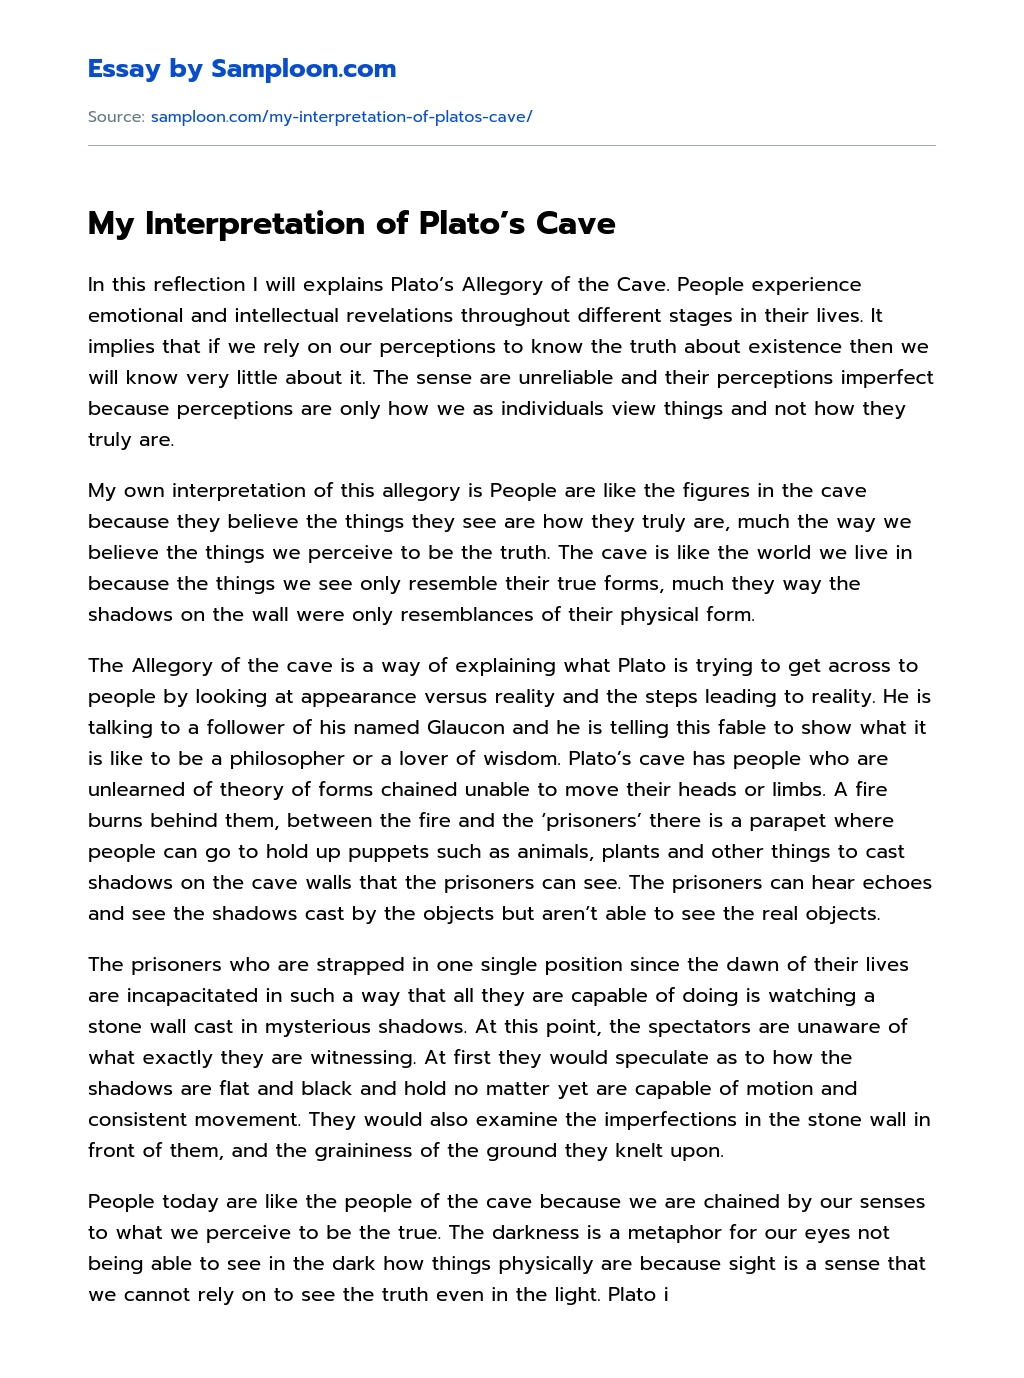 My Interpretation of Plato’s Cave Character Analysis essay